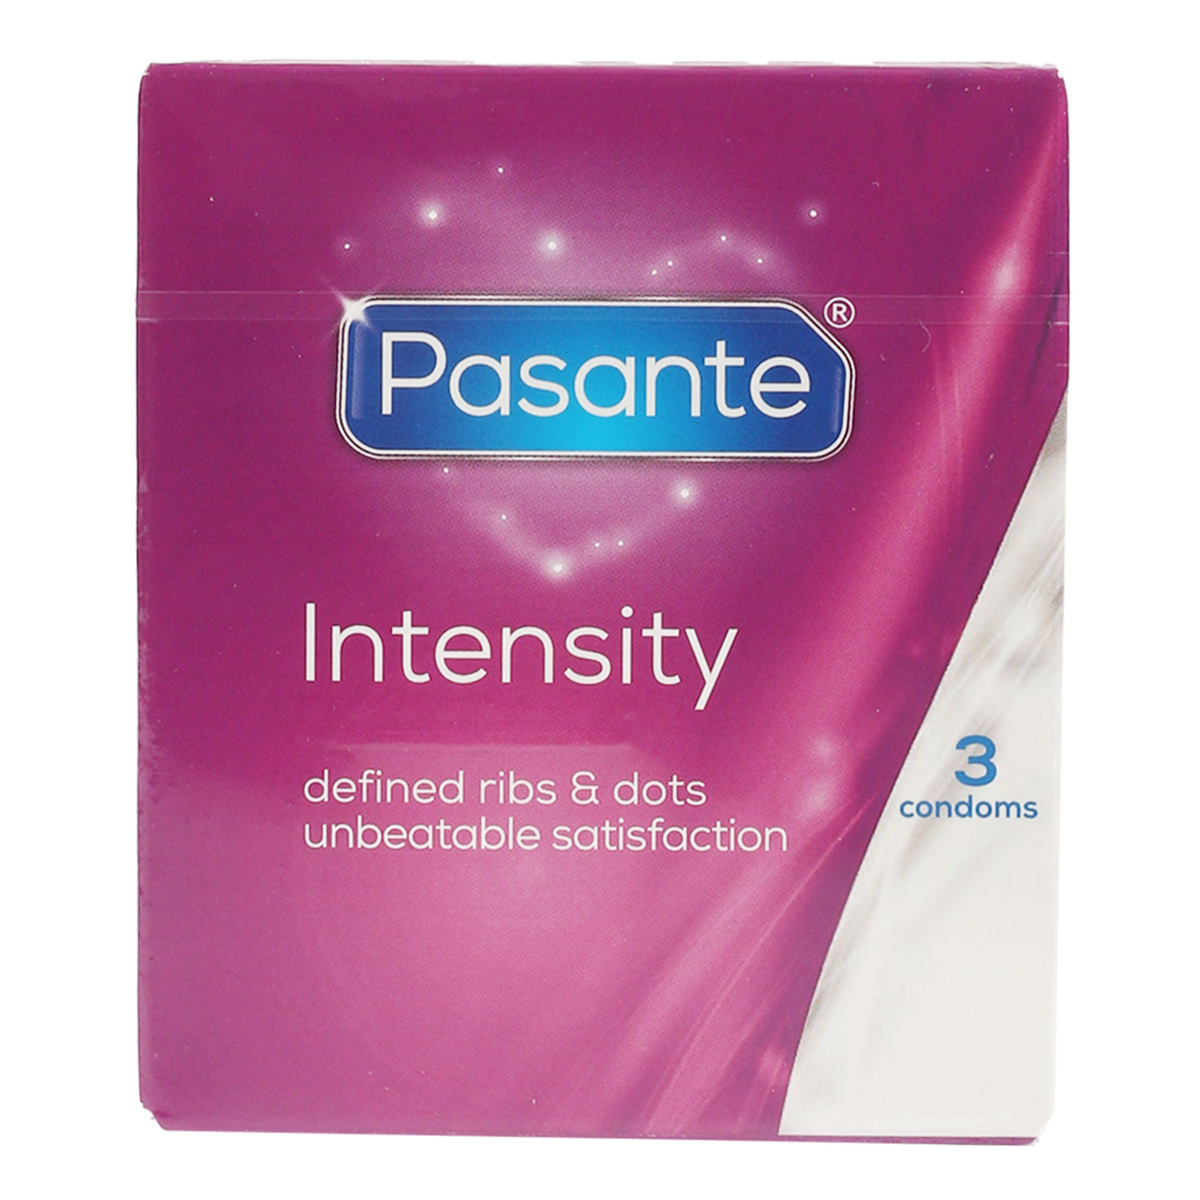 Pasante Intensity Condoms 3 pcs